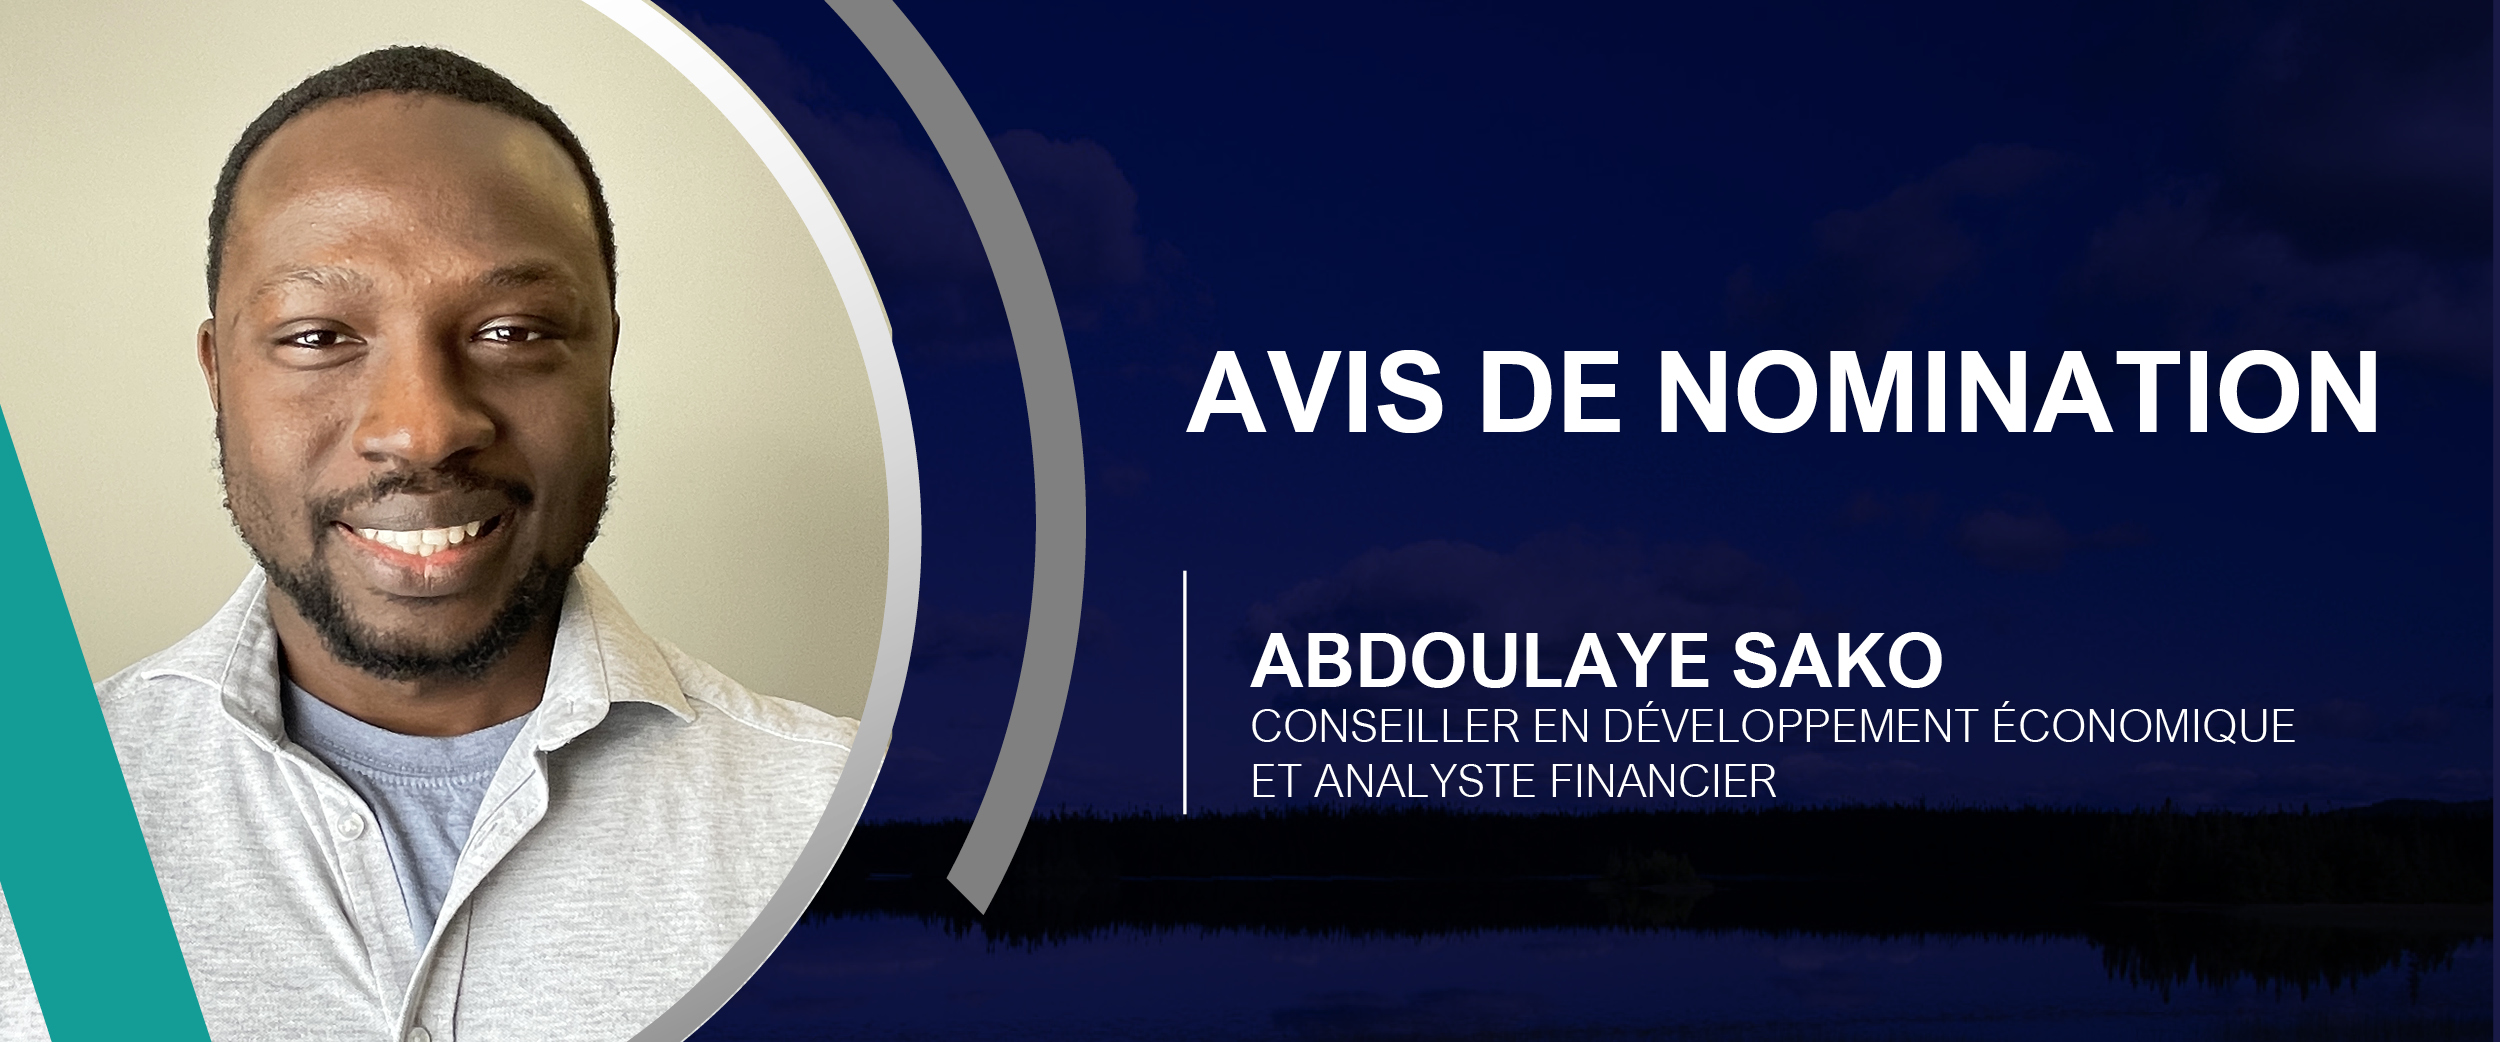 Avis de nomination Abdoulaye Sako